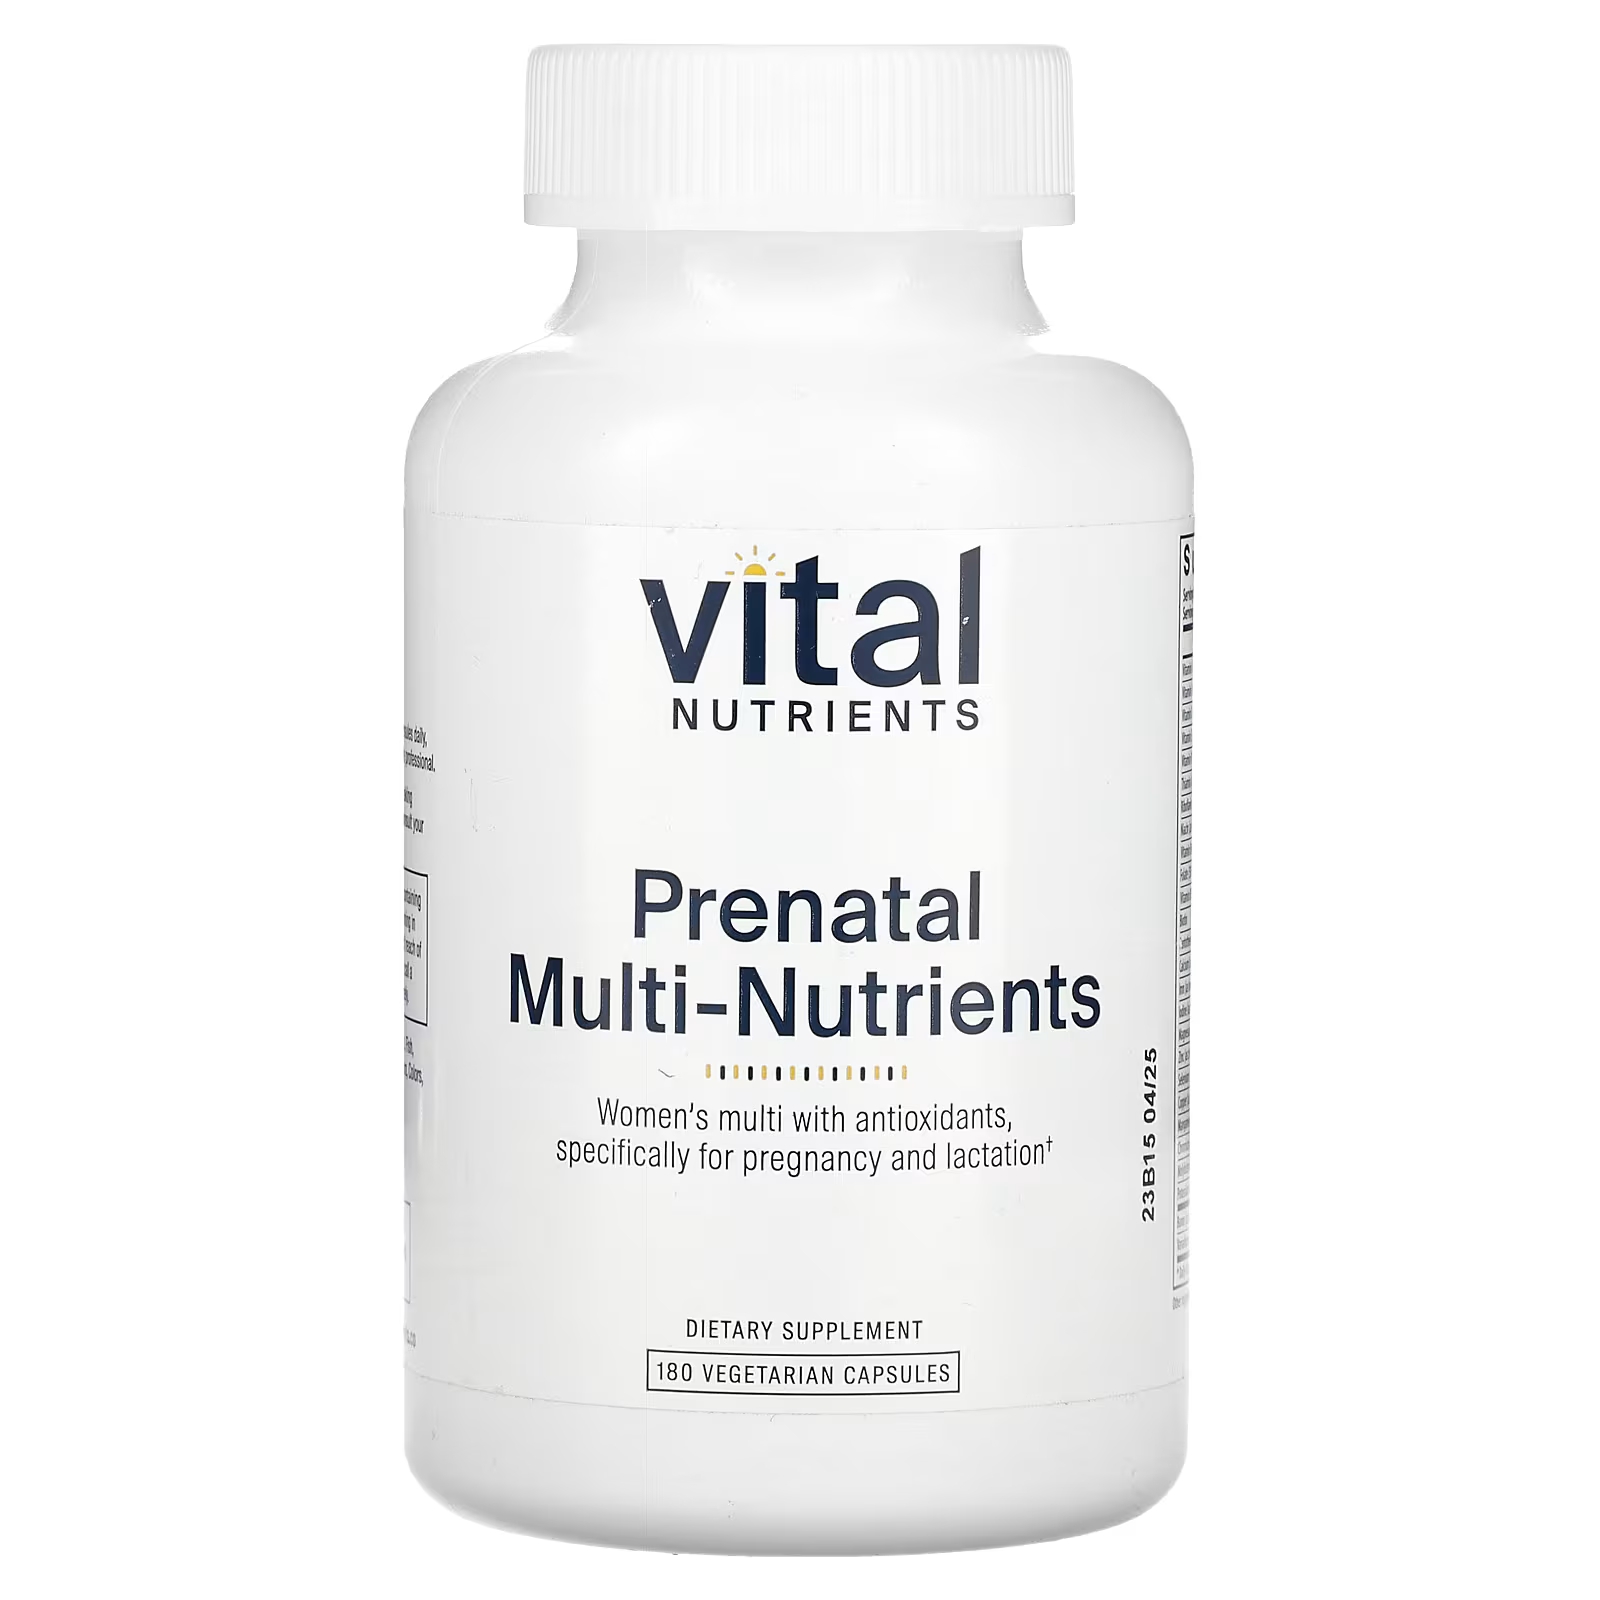 Пищевая добавка Vital Nutrients Prenatal Multi-Nutrients, 180 капсул витамины антиоксиданты минералы awochactive куркумин